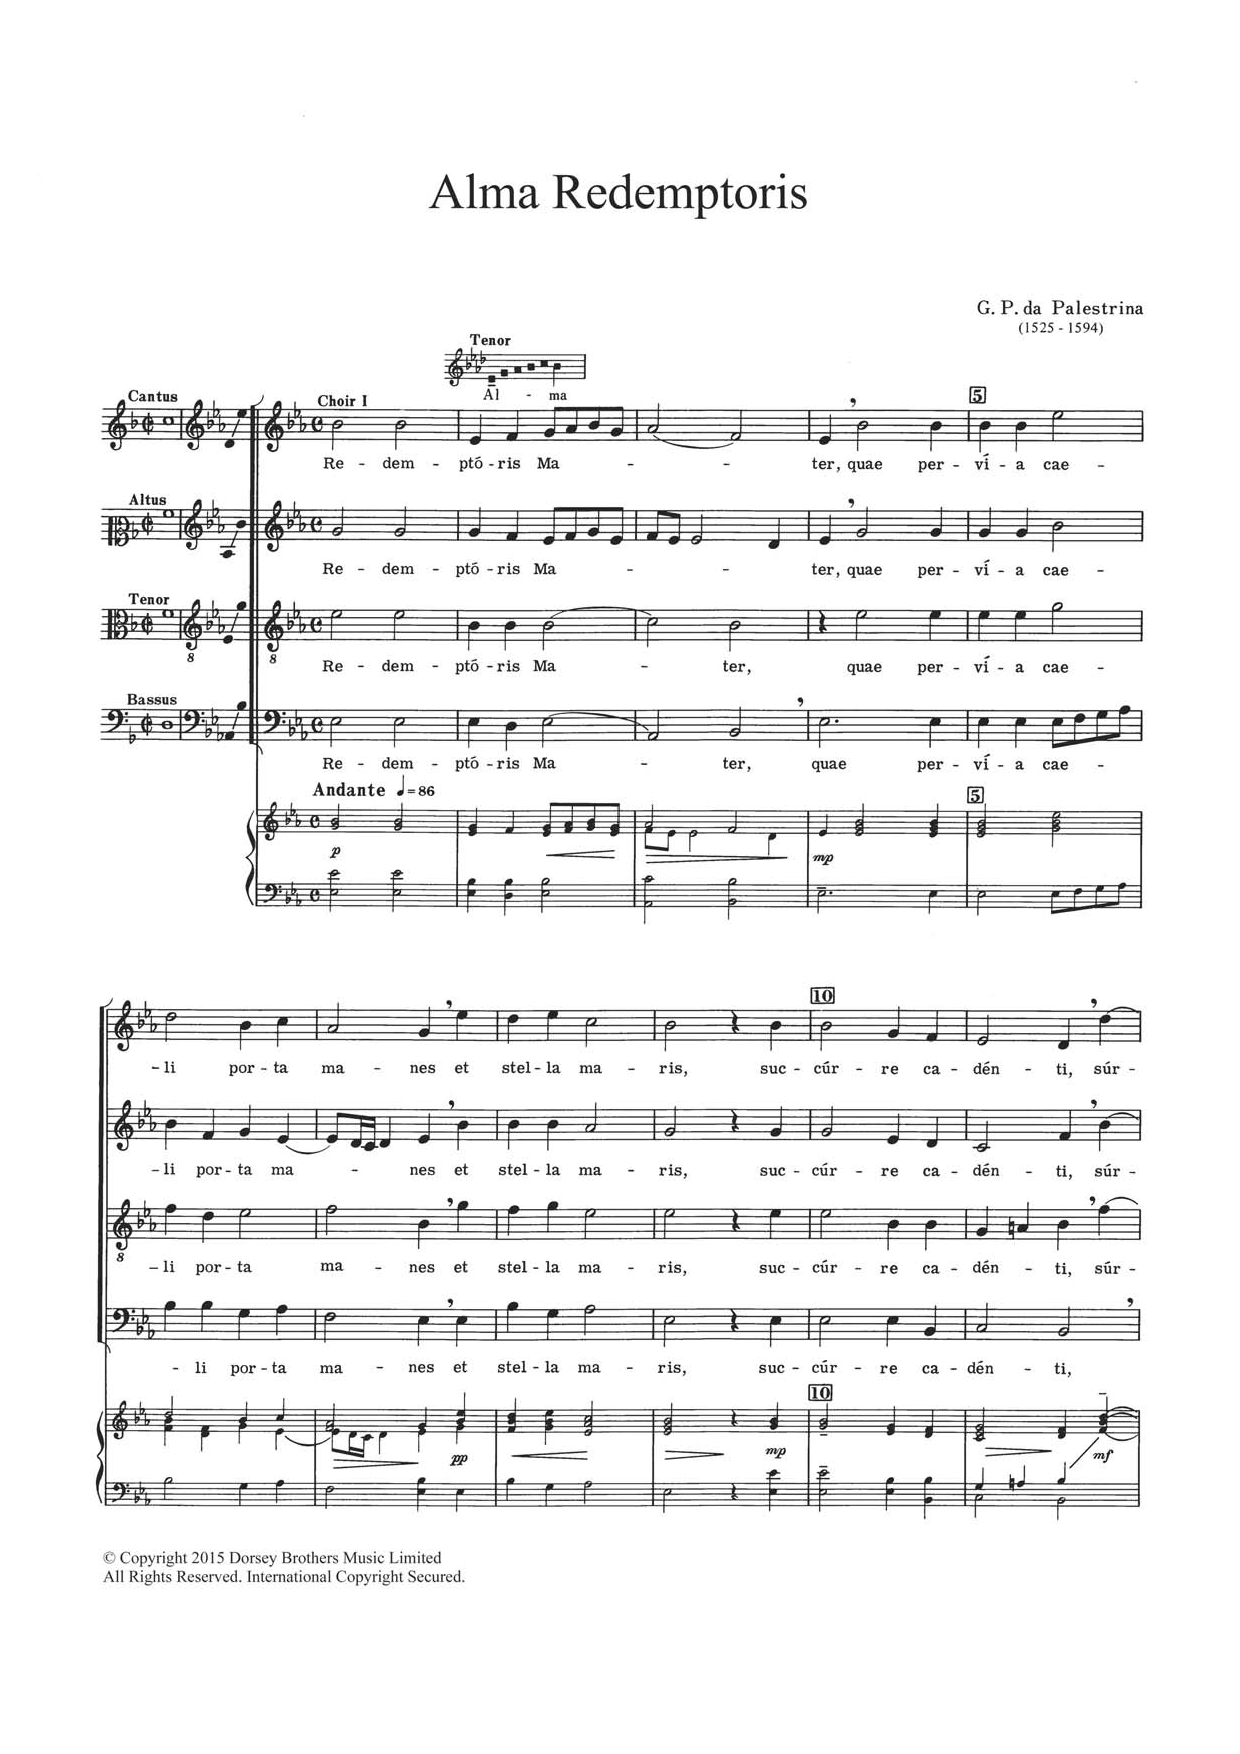 Giovanni Palestrina Alma Redemptoris Sheet Music Notes & Chords for Choir - Download or Print PDF